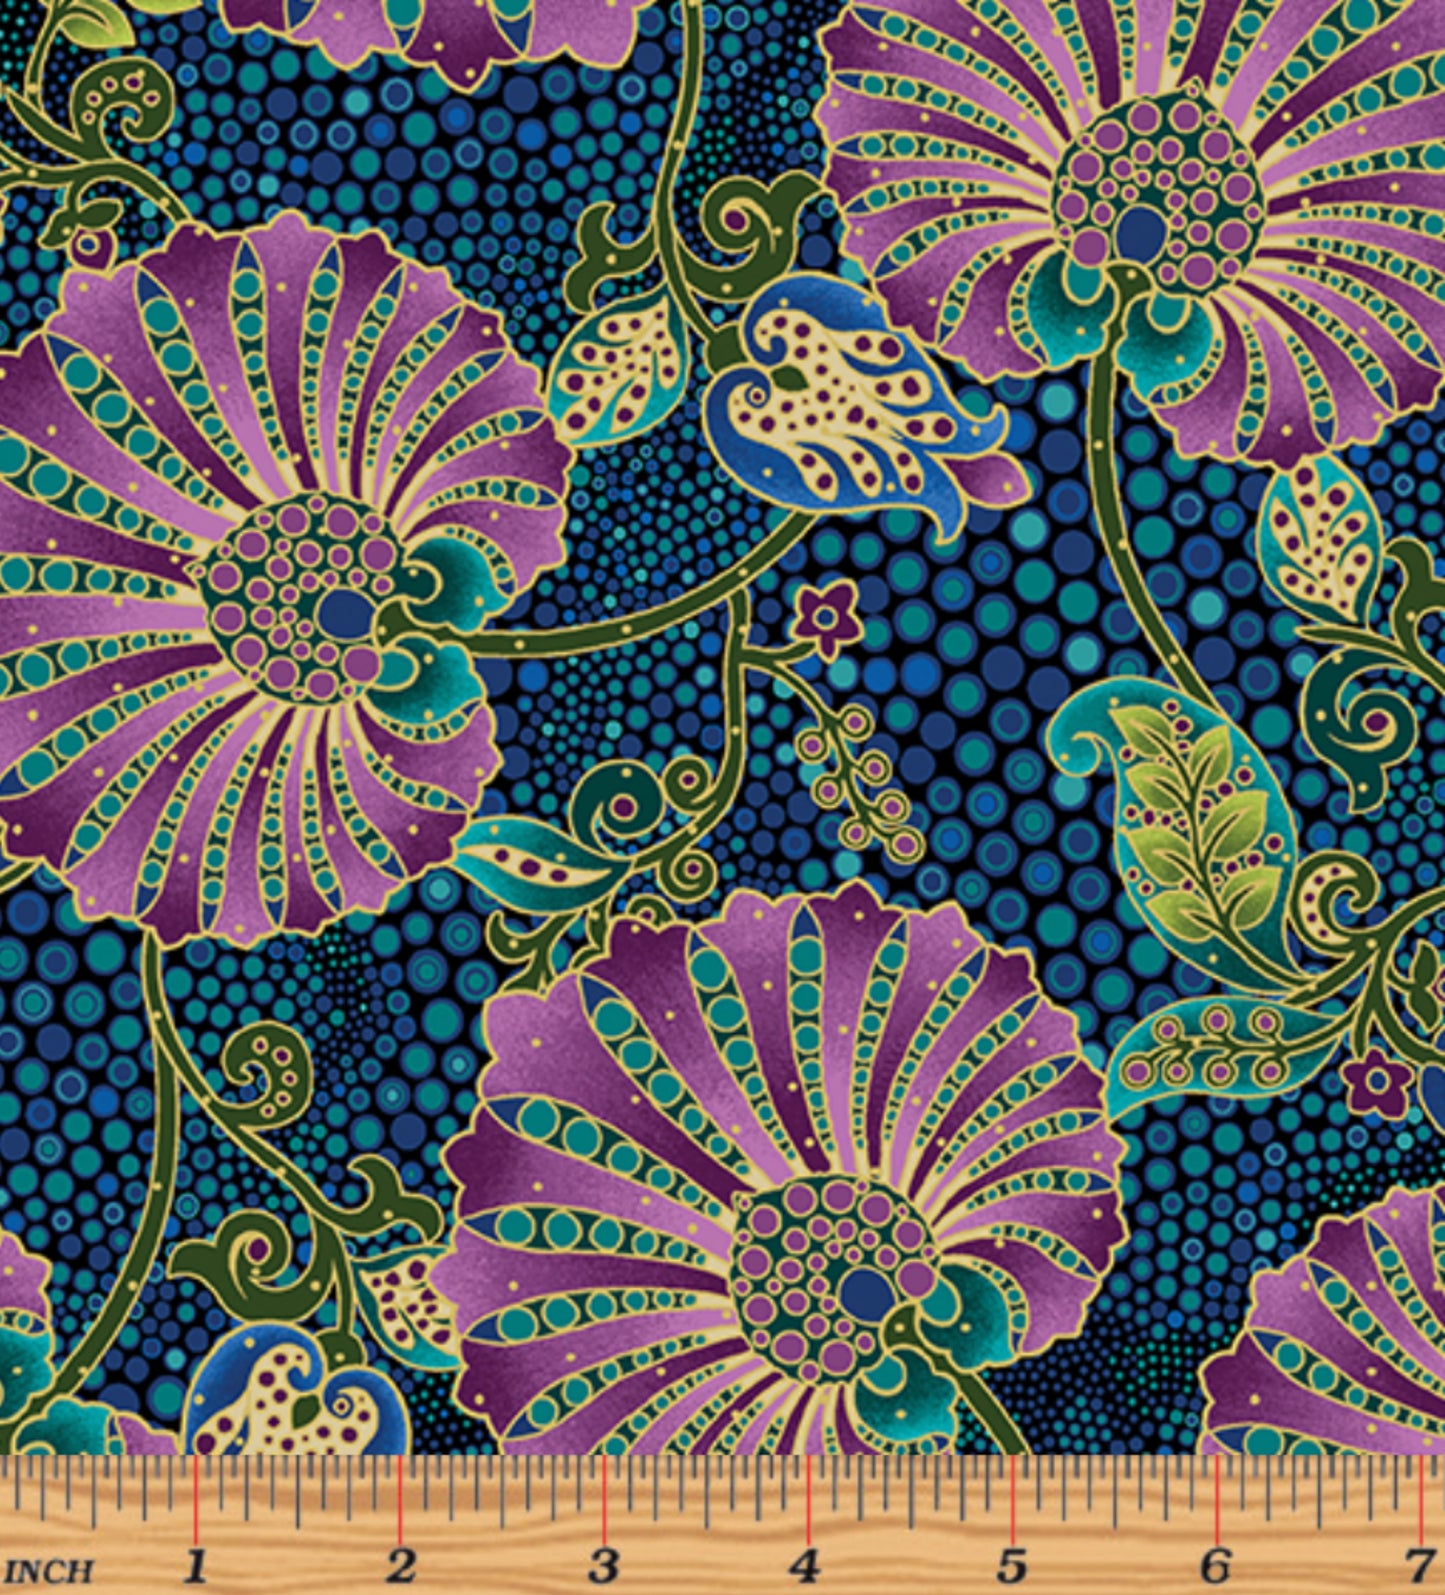 Fanflower Fabric in Teal - Shangri La Collection - Painted Sky Studio for Benartex